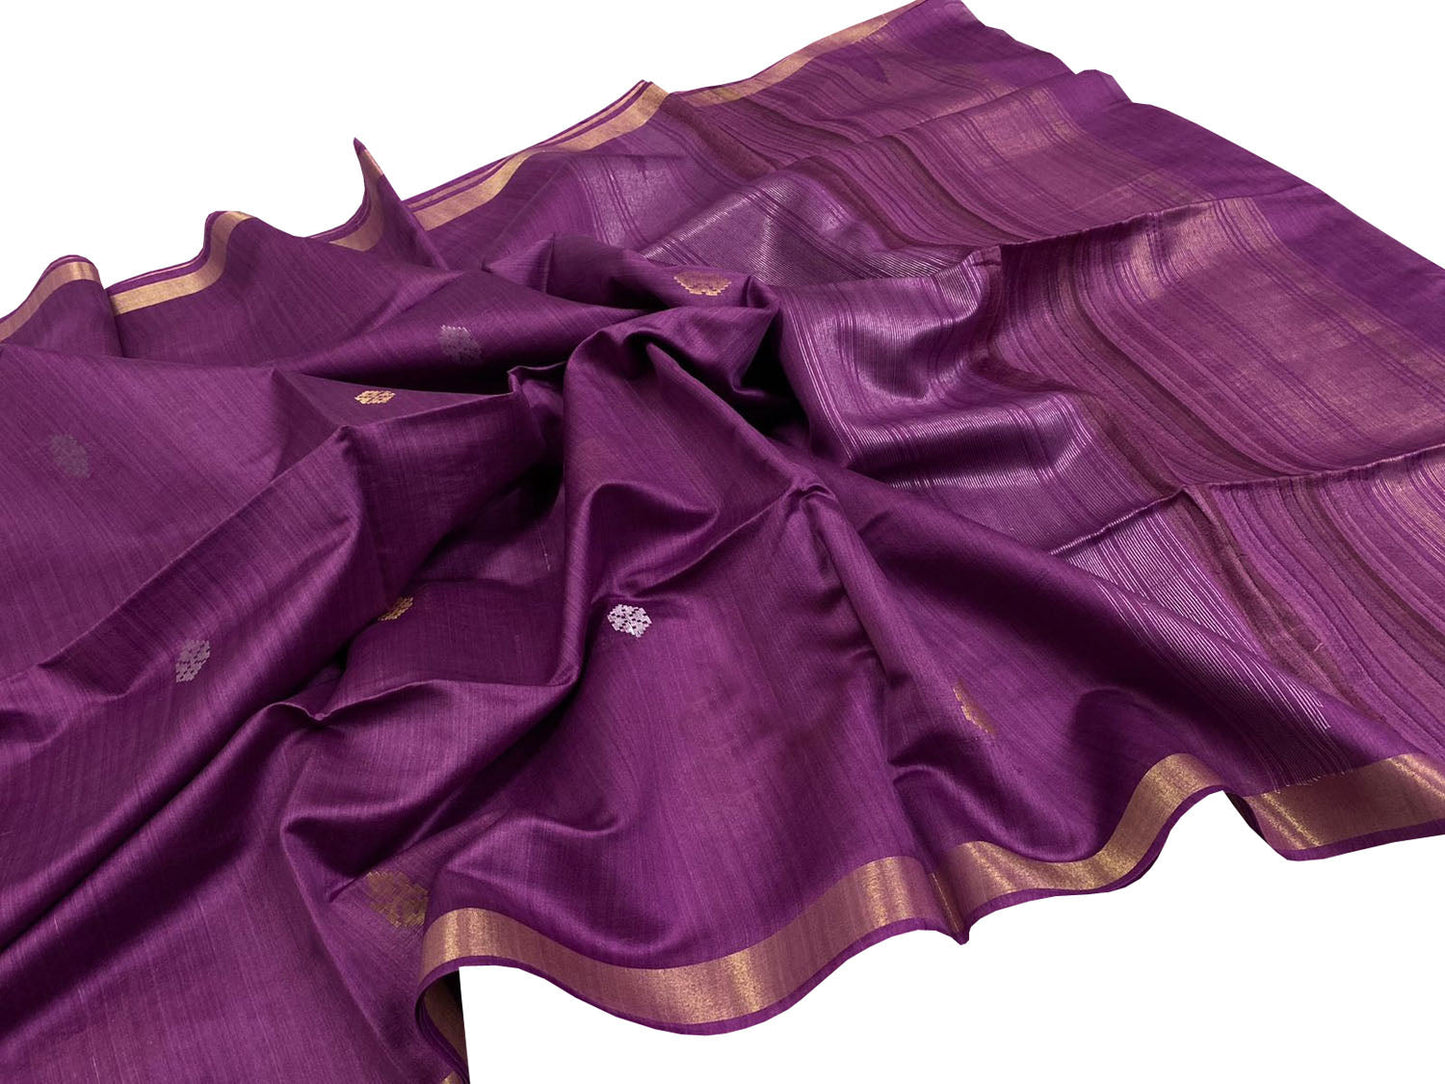 Purple Bhagalpur Handloom Pure Tussar Silk Saree - Luxurion World